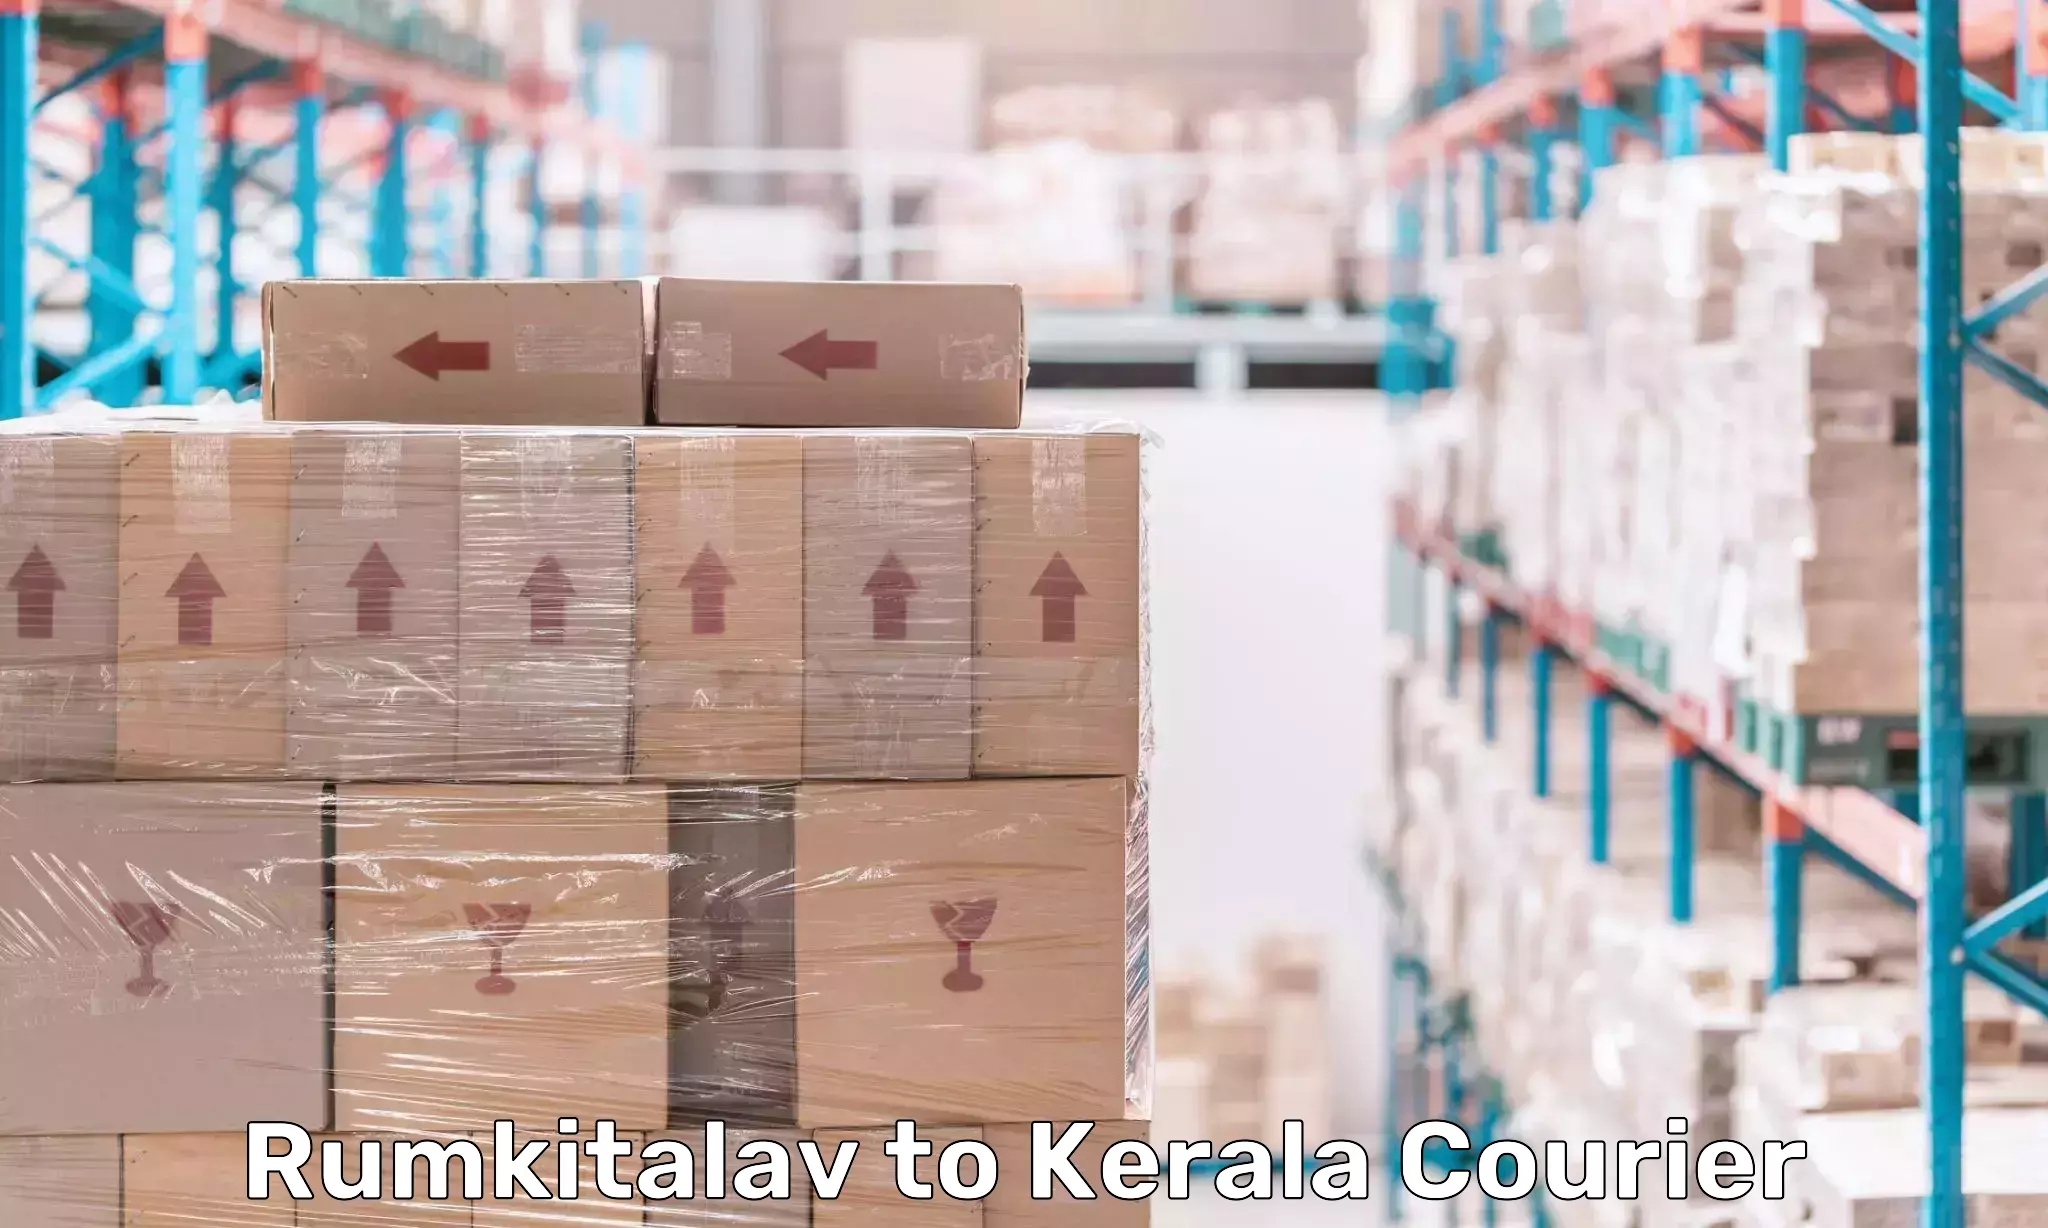 Parcel handling and care Rumkitalav to Kerala